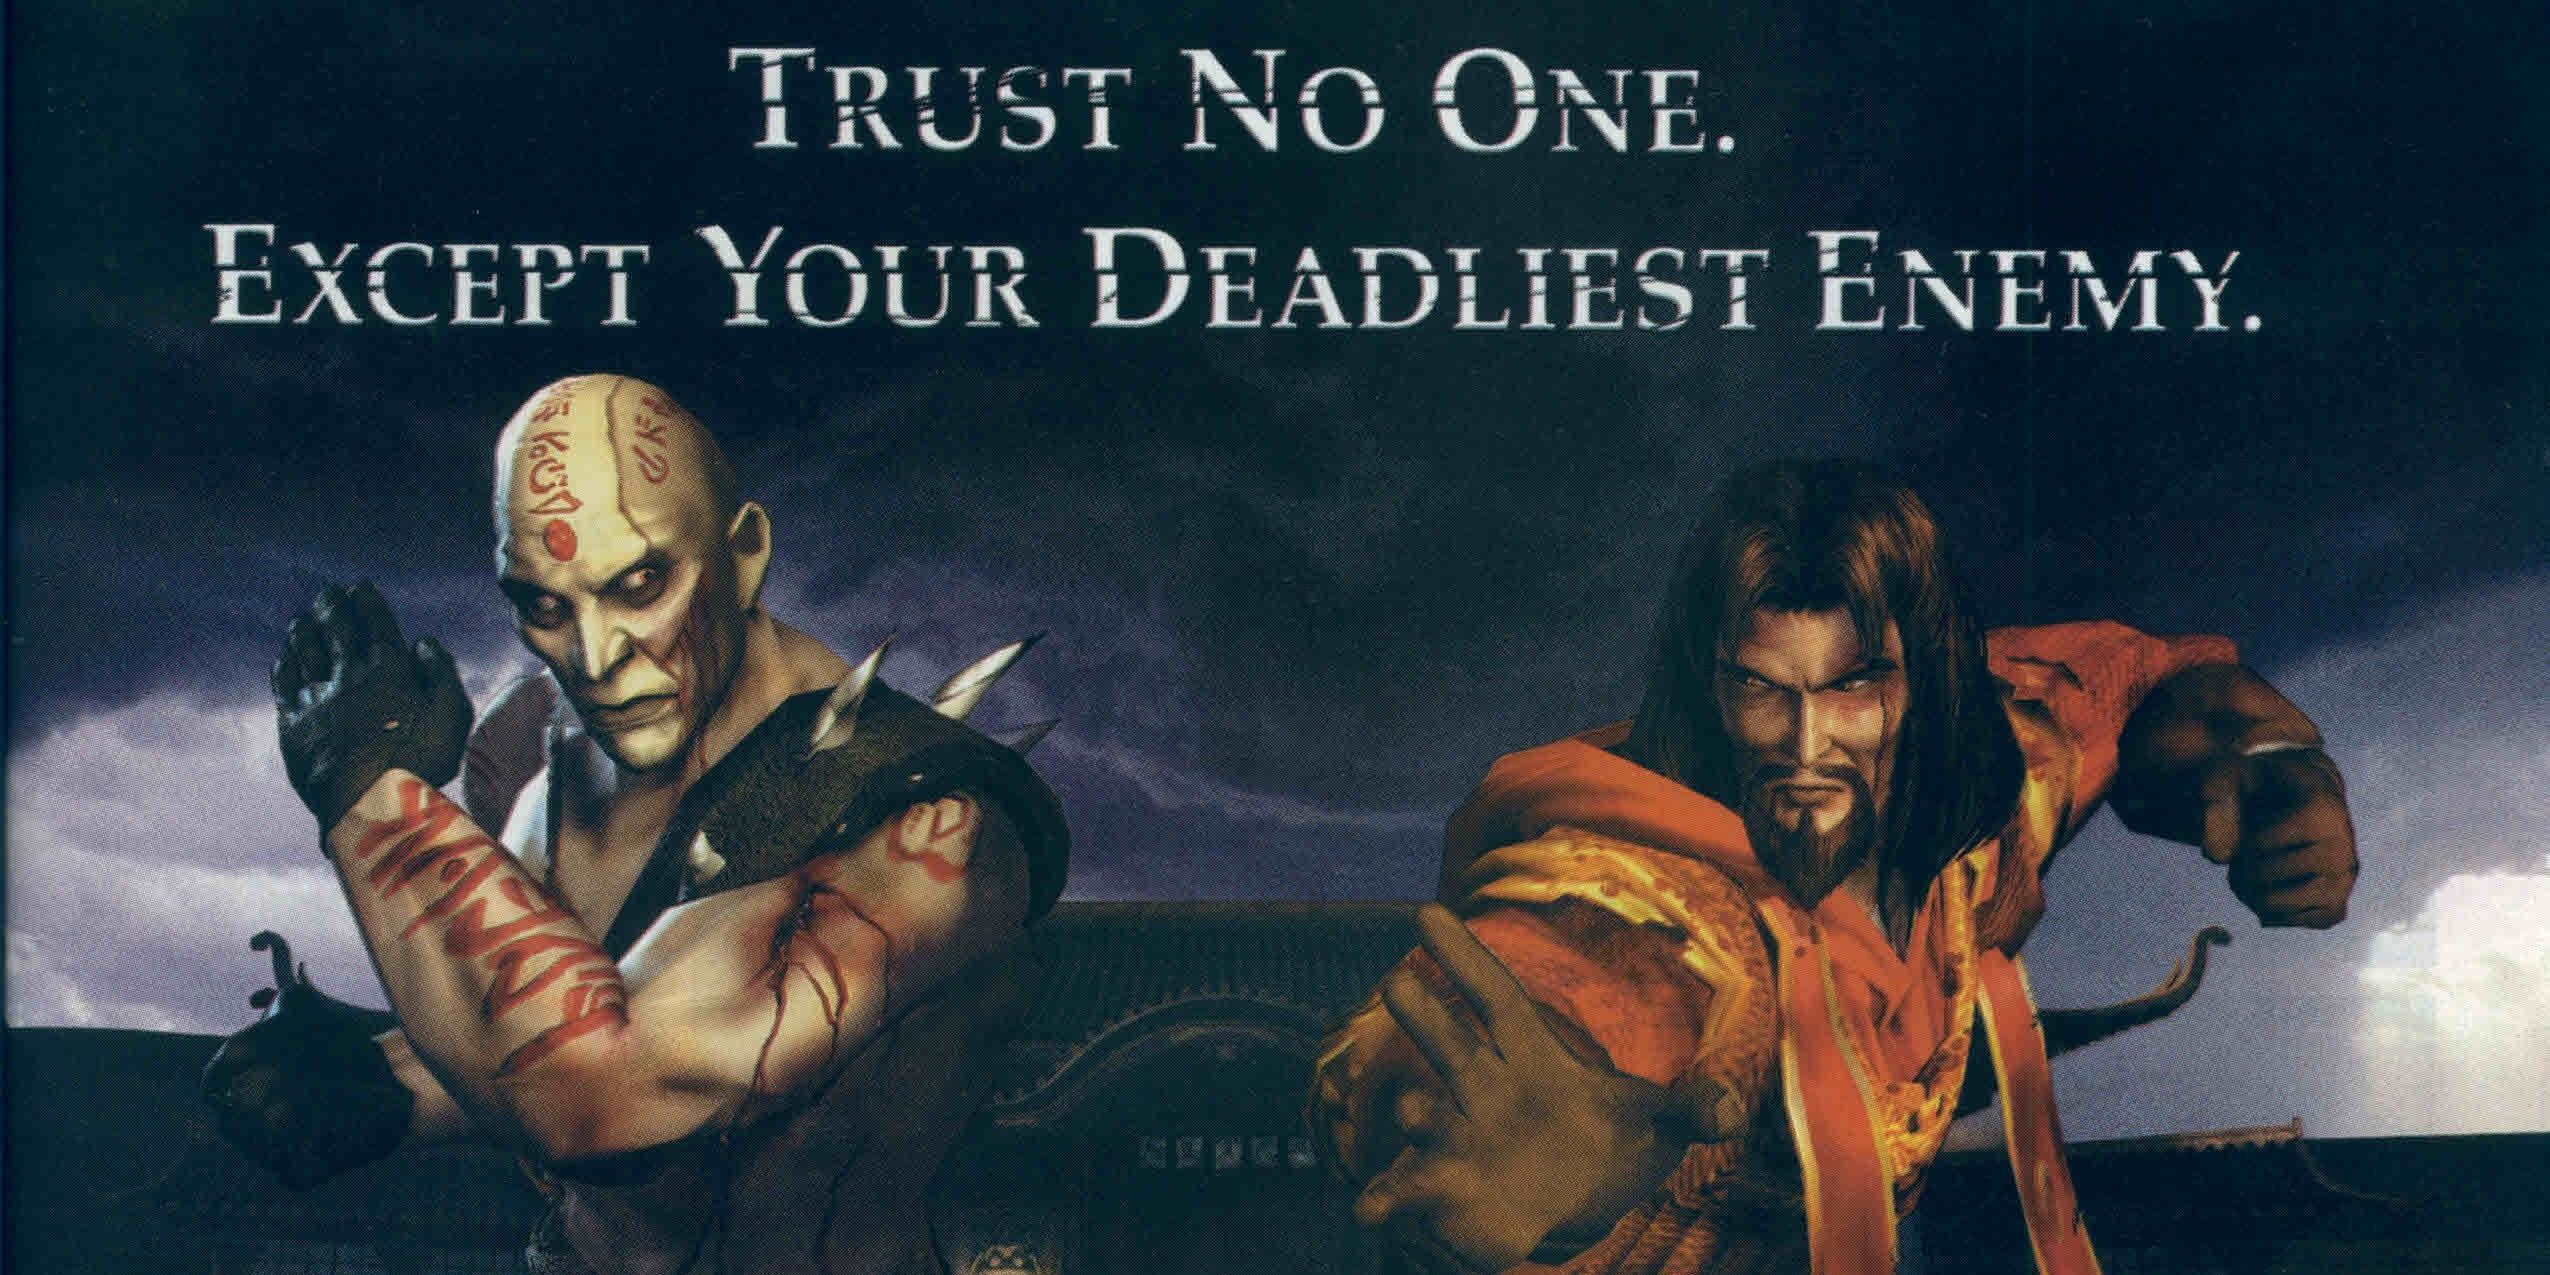 Original Mortal Kombat Deadly Alliance advertisement